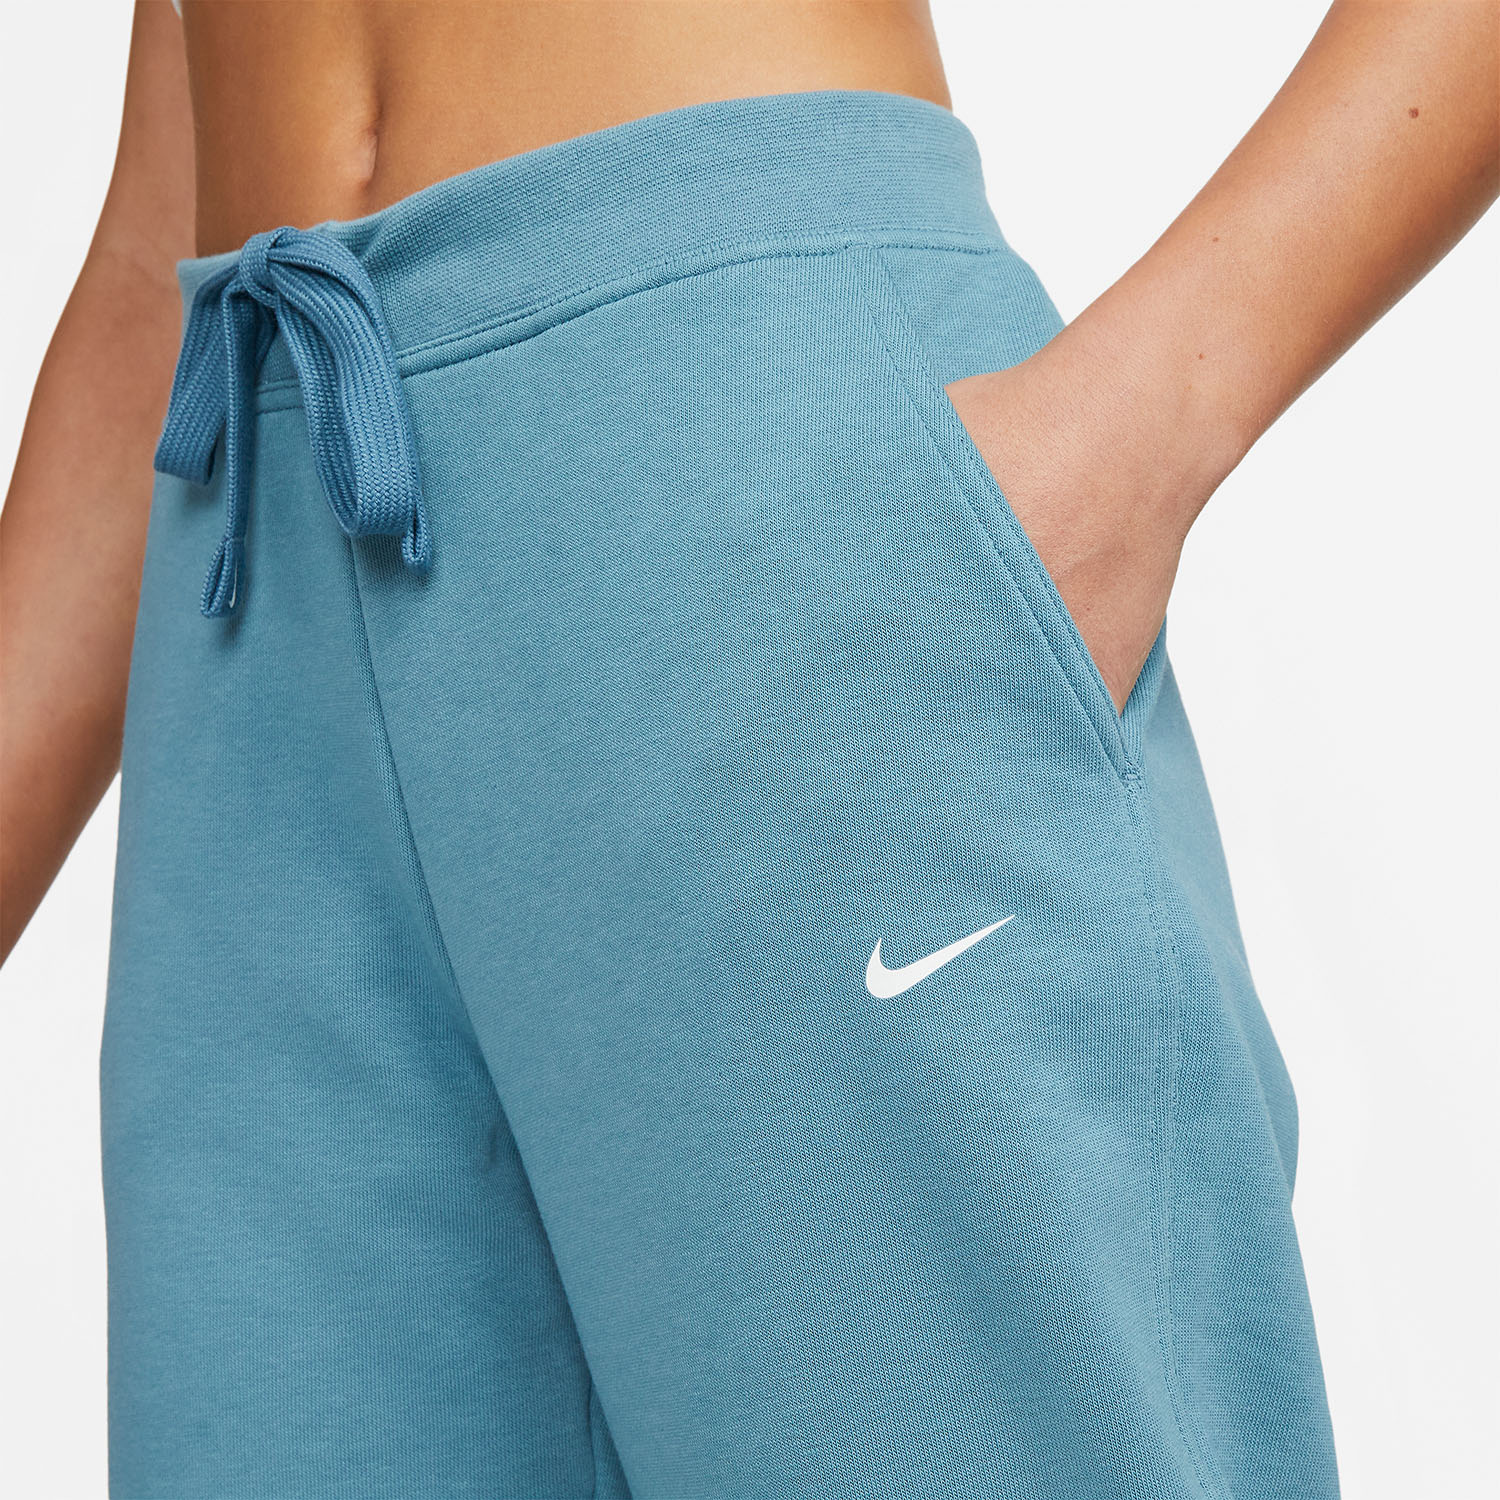 Nike Dri-FIT Get Fit Classic Pants - Noise Aqua/White